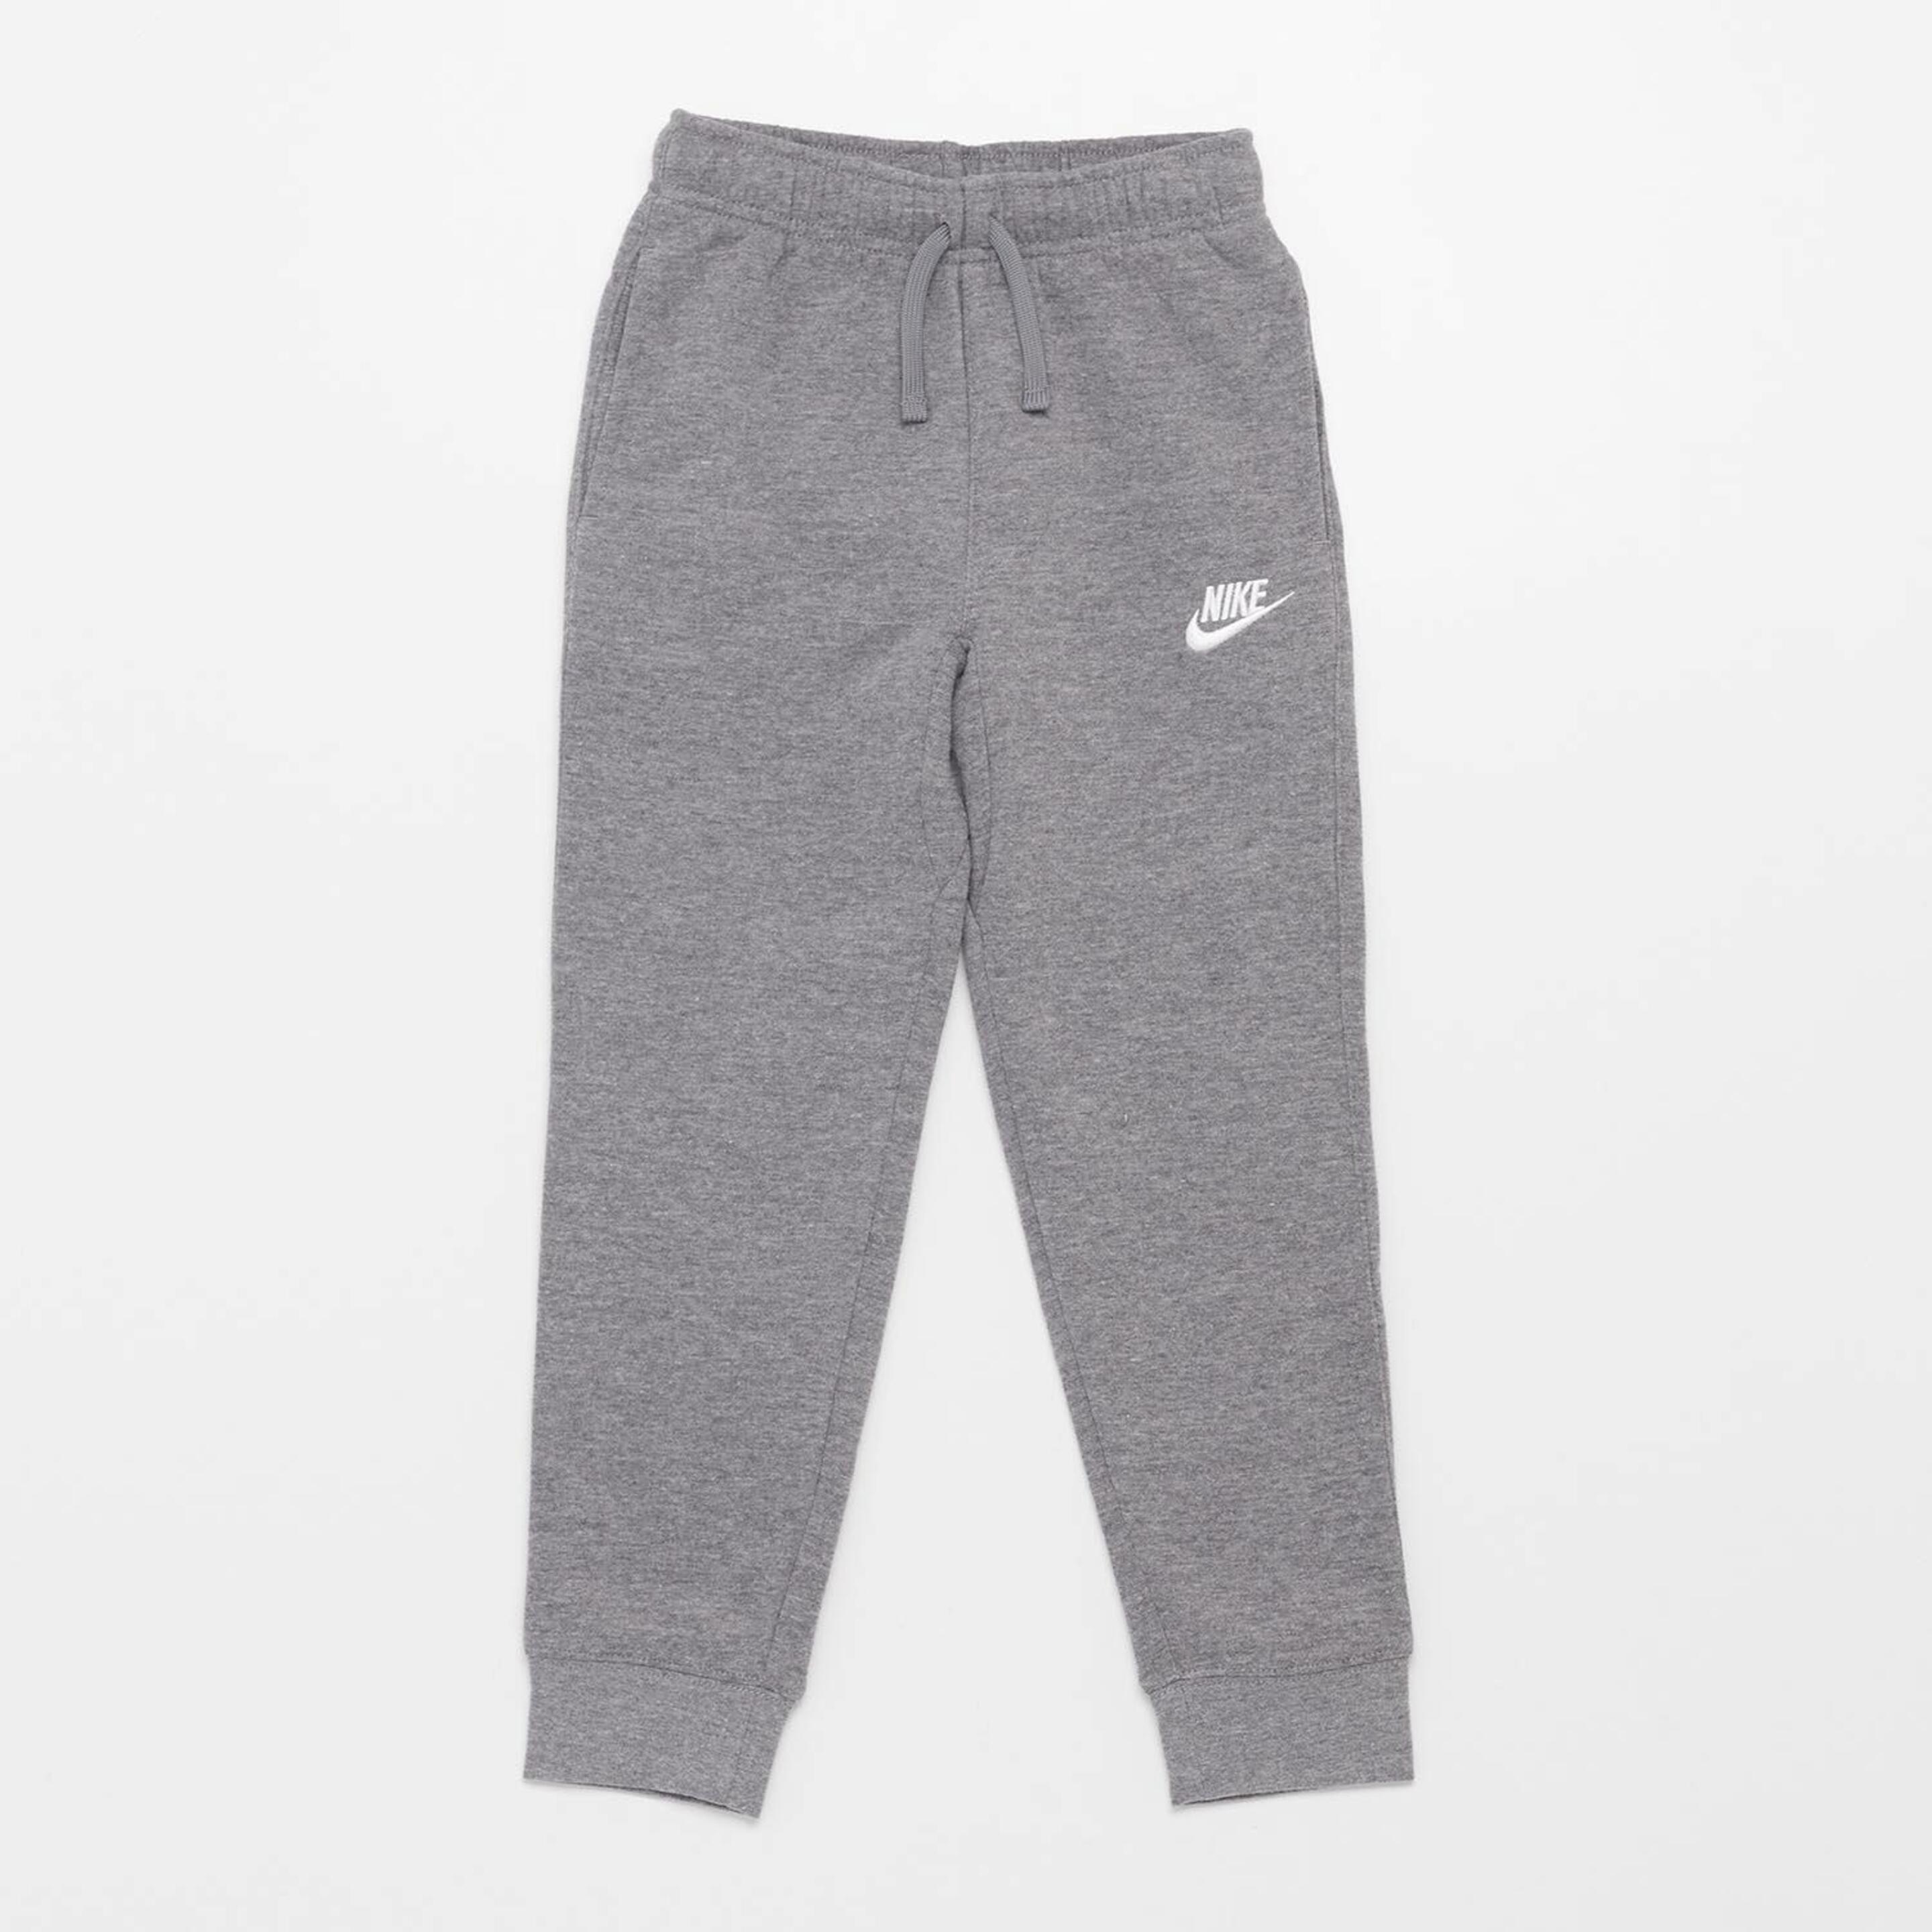 Pantalón Nike - gris - Pantalón Niño